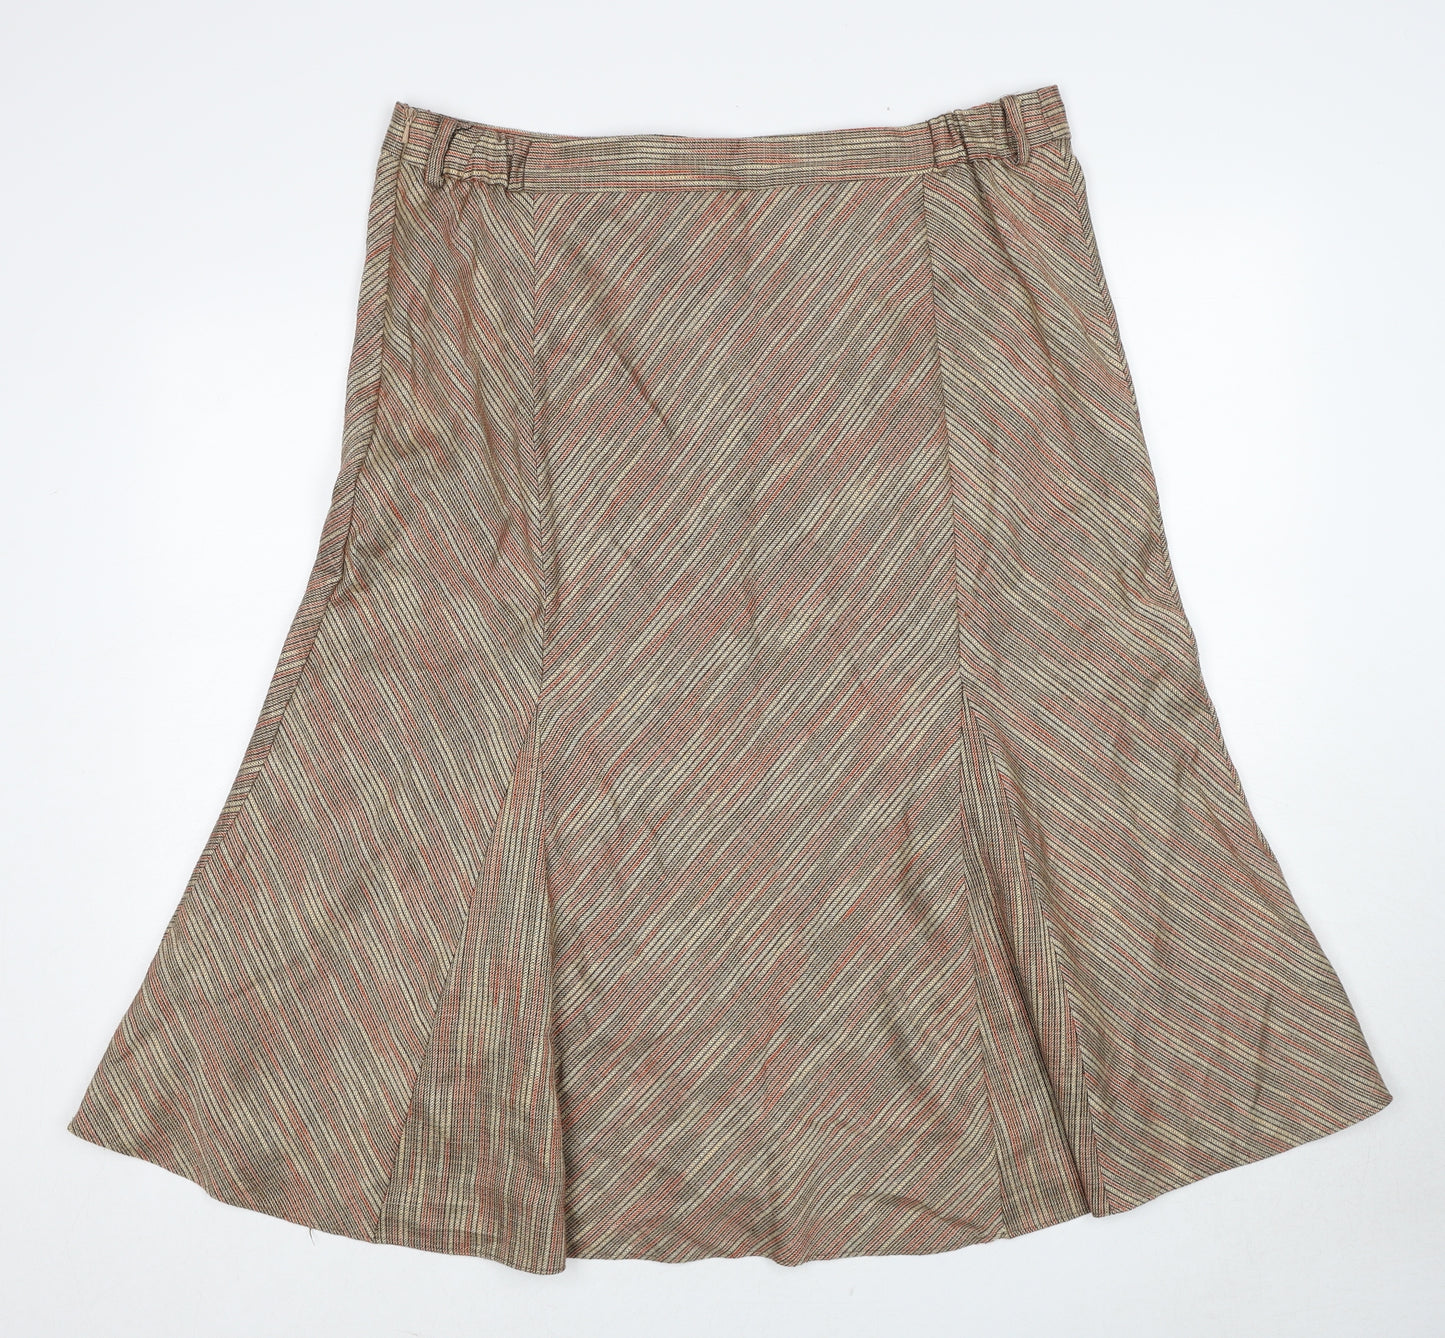 Damart Womens Brown Geometric Polyester Swing Skirt Size 20 Zip